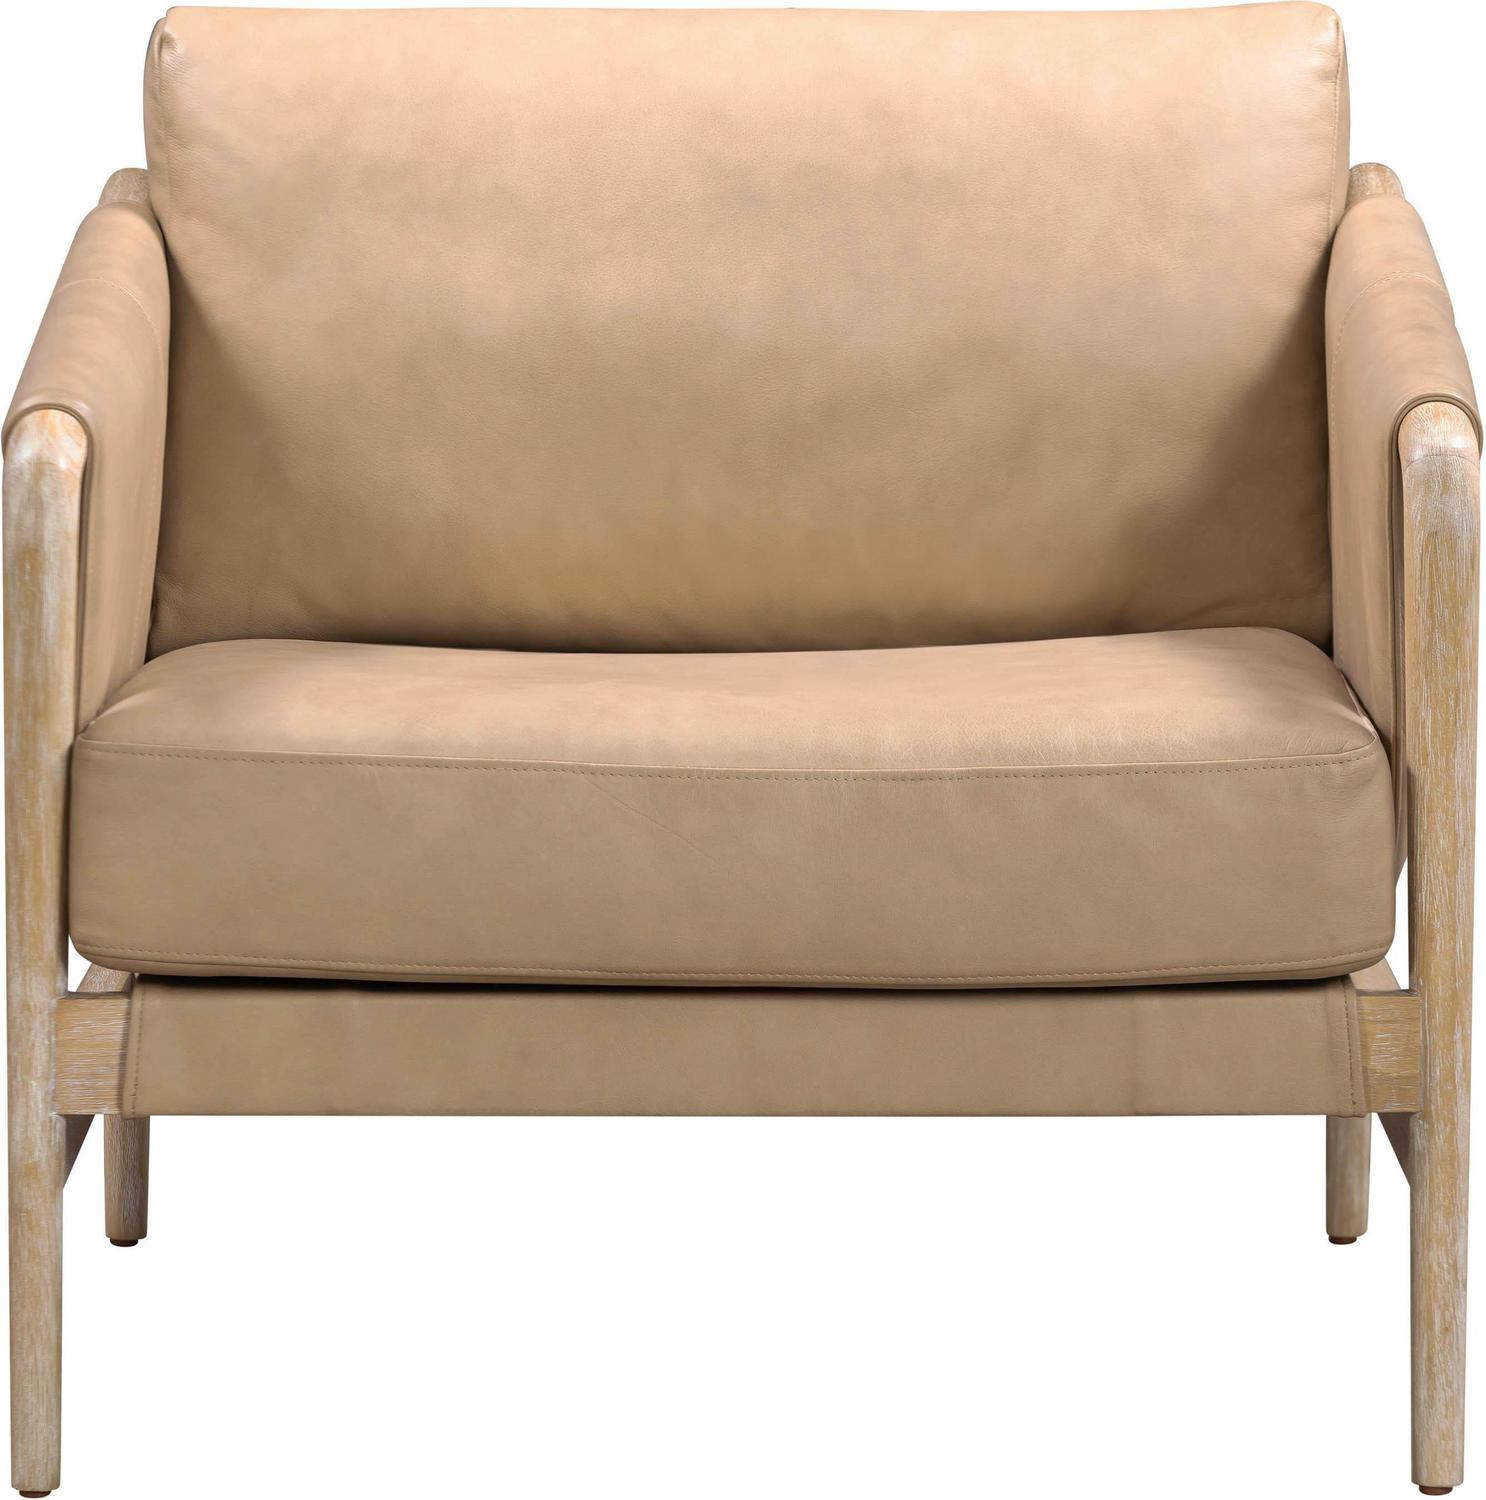 cream velvet chair Tov Furniture Accent Chairs Tan,White